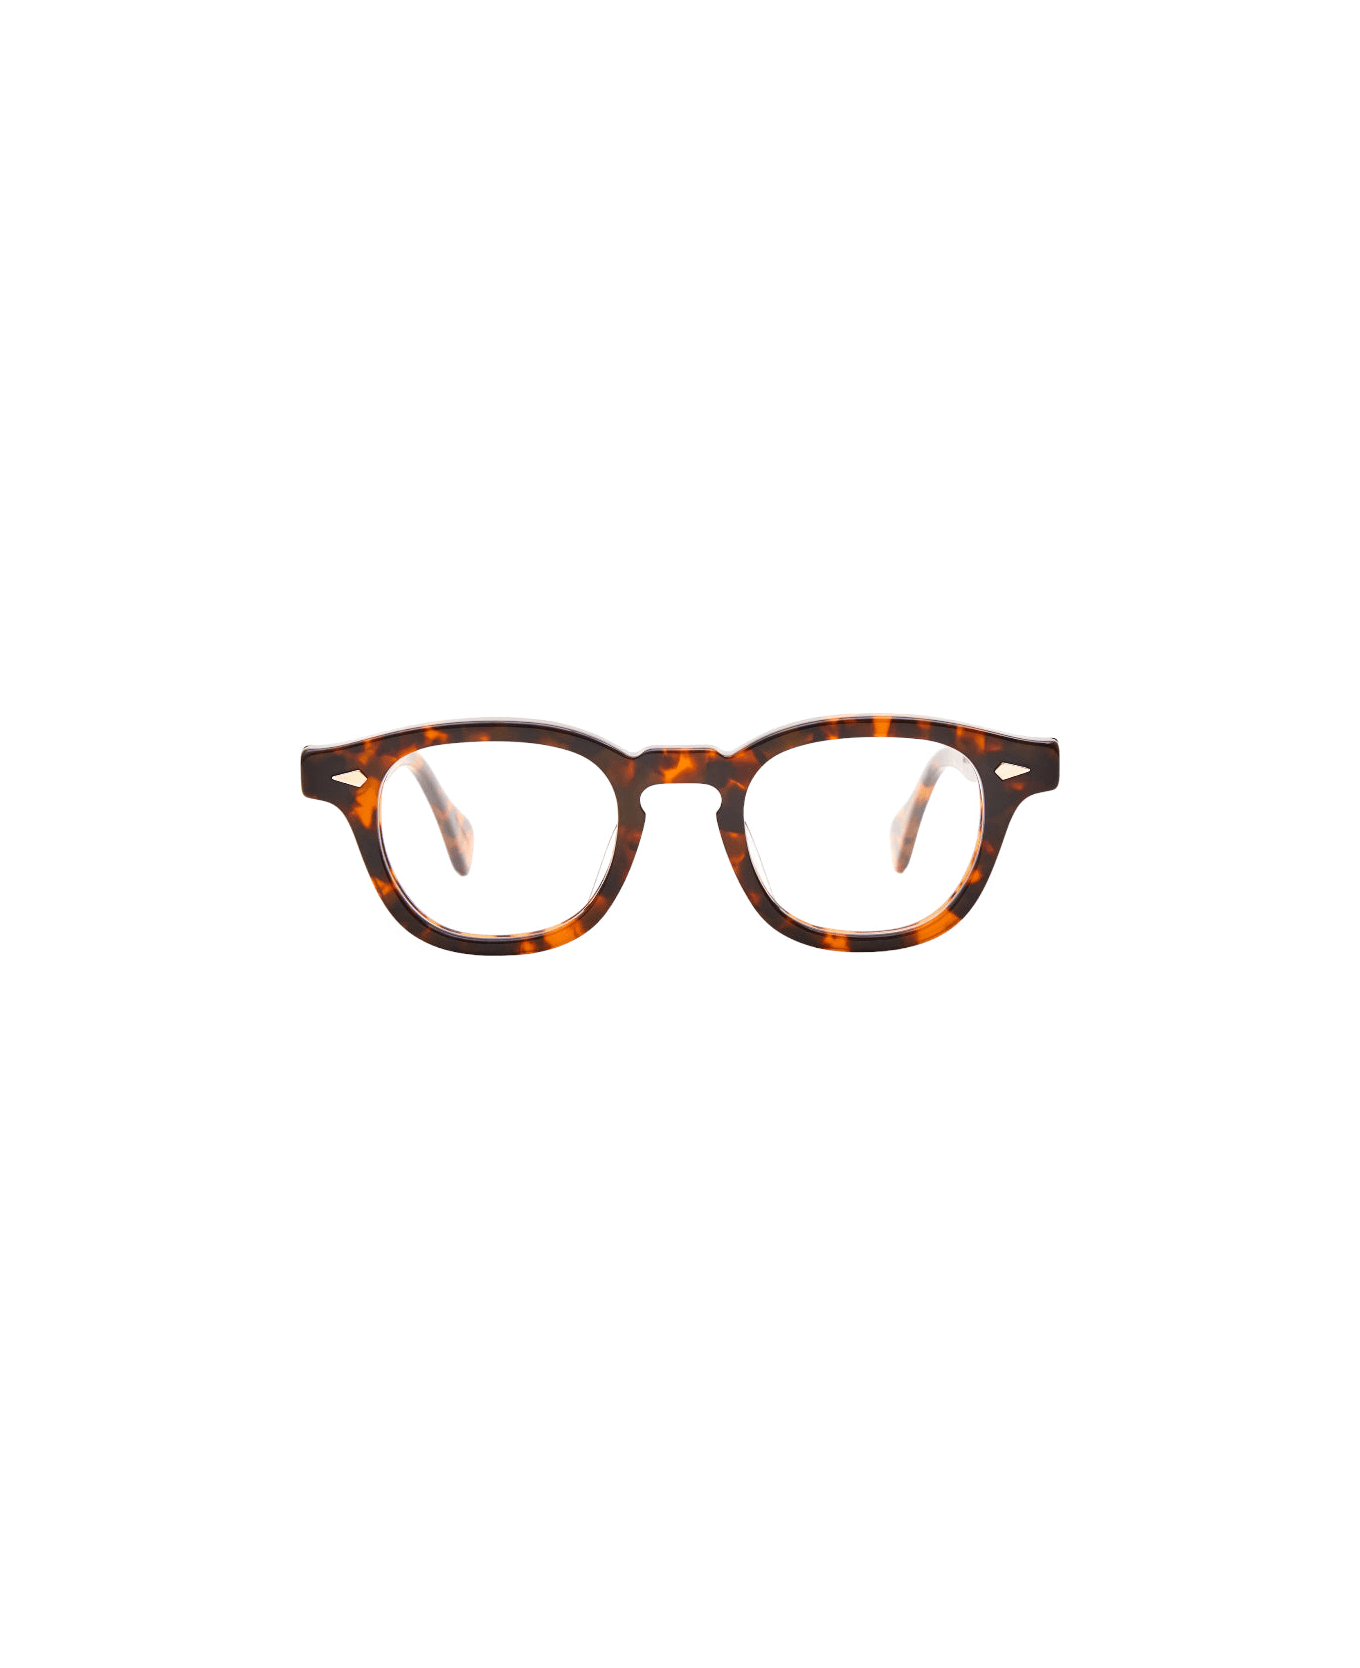 Julius Tart Optical Ar Glasses アイウェア